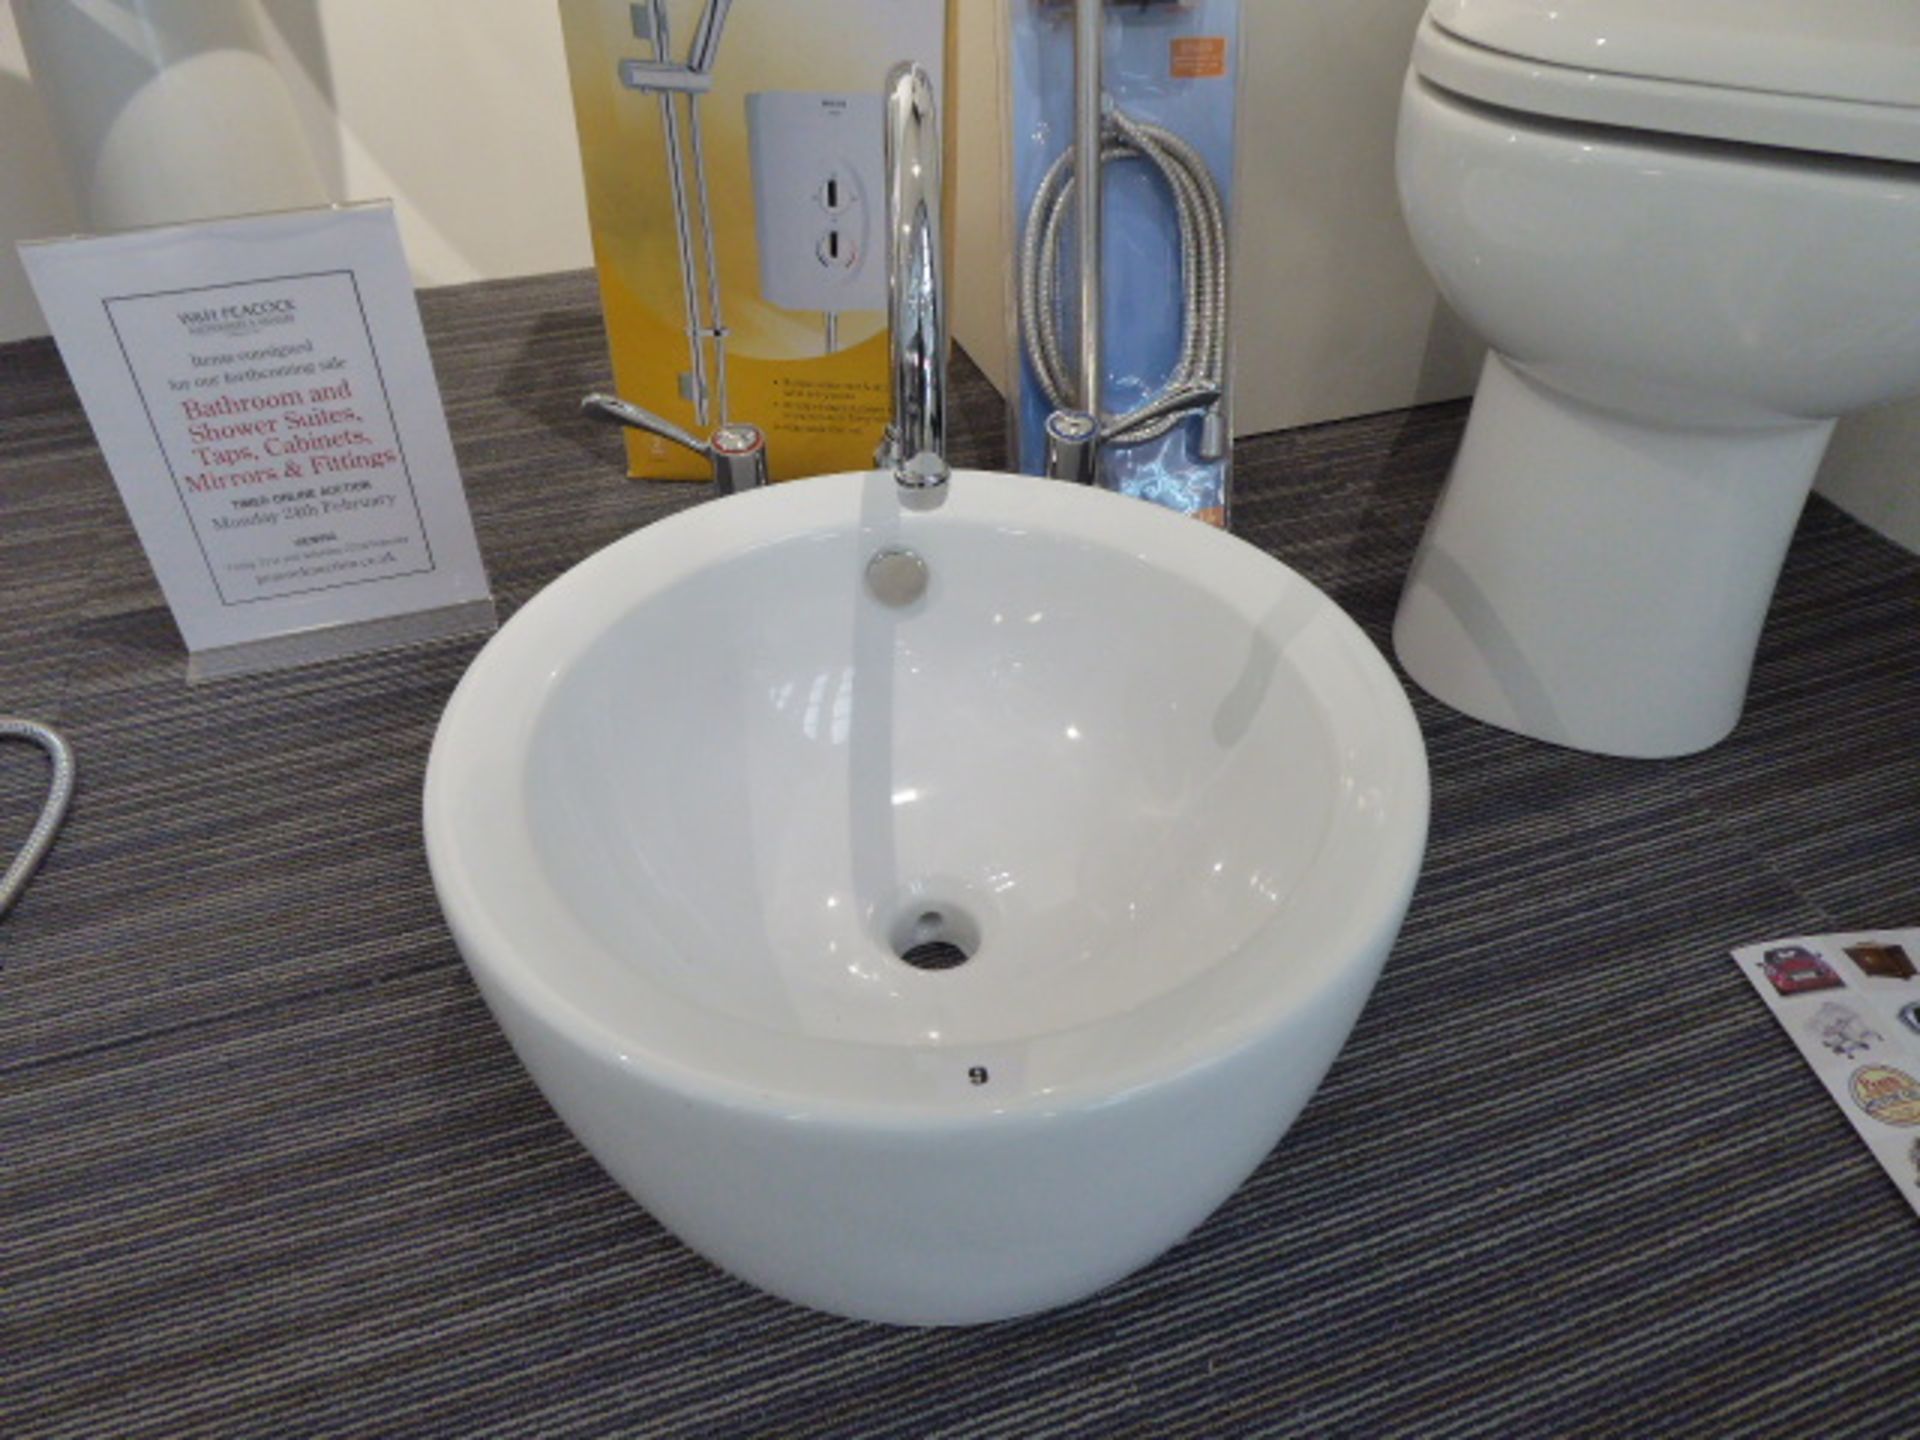 Circular white ceramic hand basin with mixer tap - Image 2 of 2